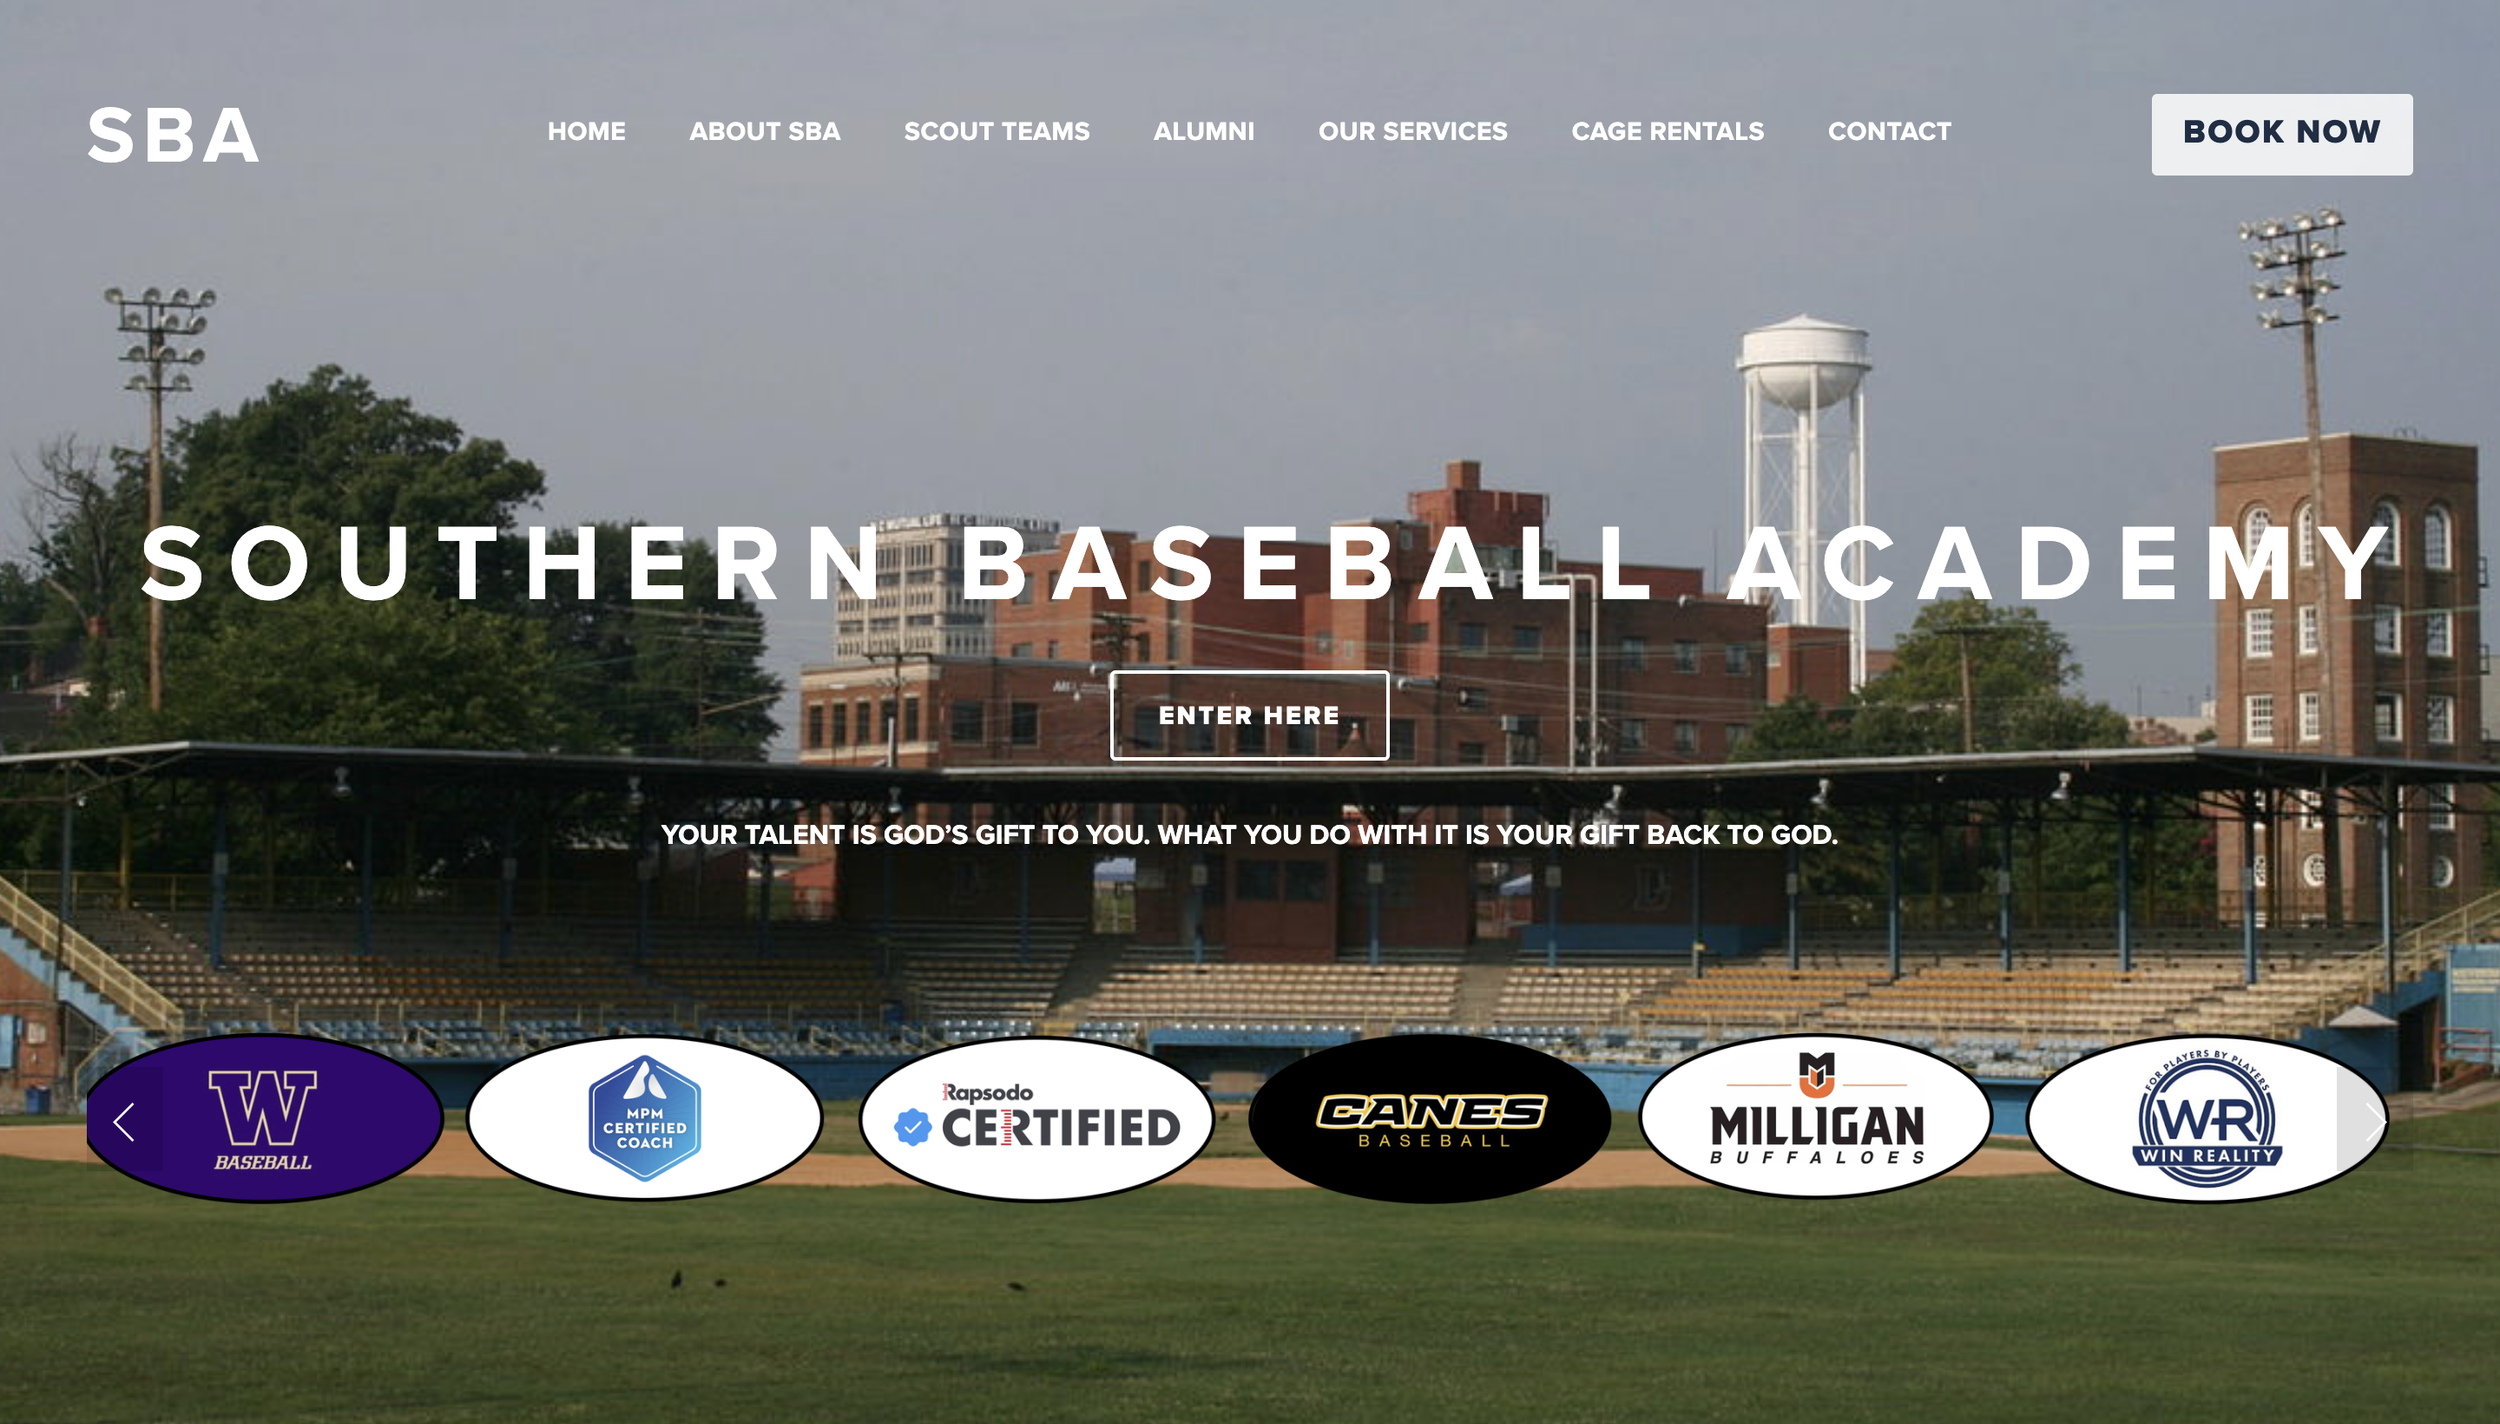 Southern Baseball Academy (Re-Design)